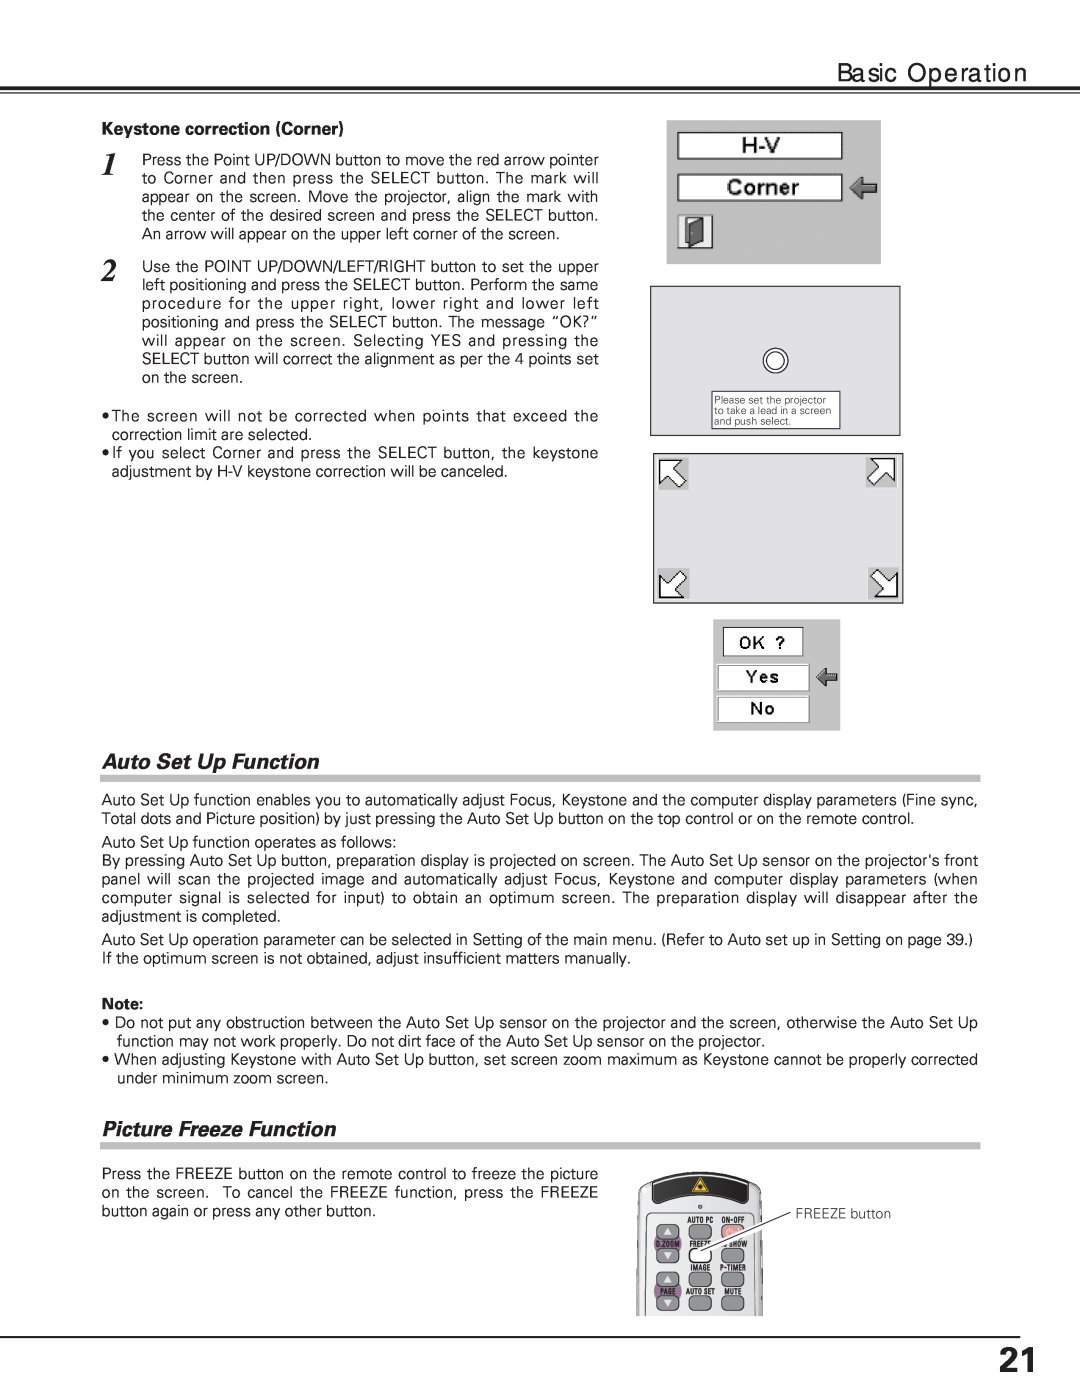 Eiki LC-XE10 instruction manual Auto Set Up Function, Picture Freeze Function, Basic Operation, Keystone correction Corner 